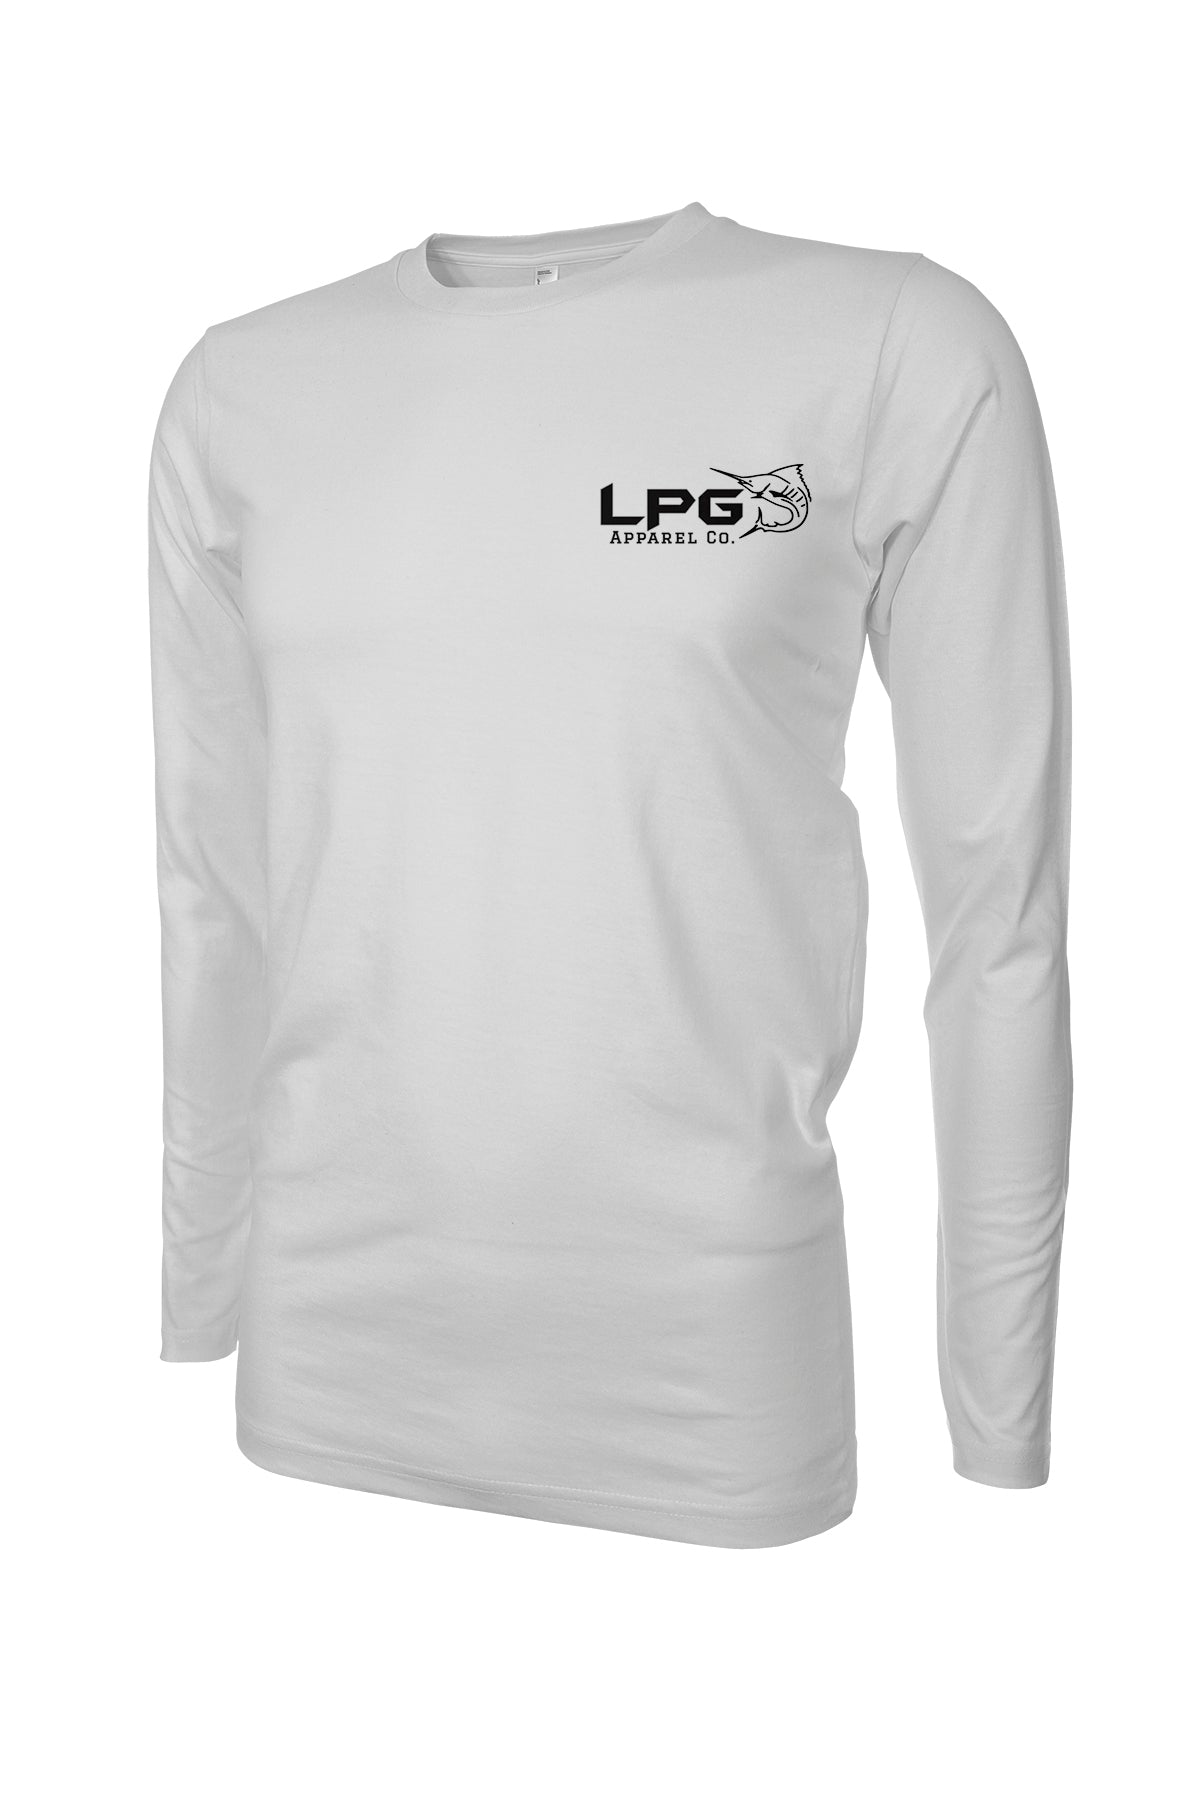 Yellowfin Tuna Chase Long Sleeve Fishing Shirt for unisex UPF 50 Dri-FIT Performance Rashguard T-Shirt White / Medium